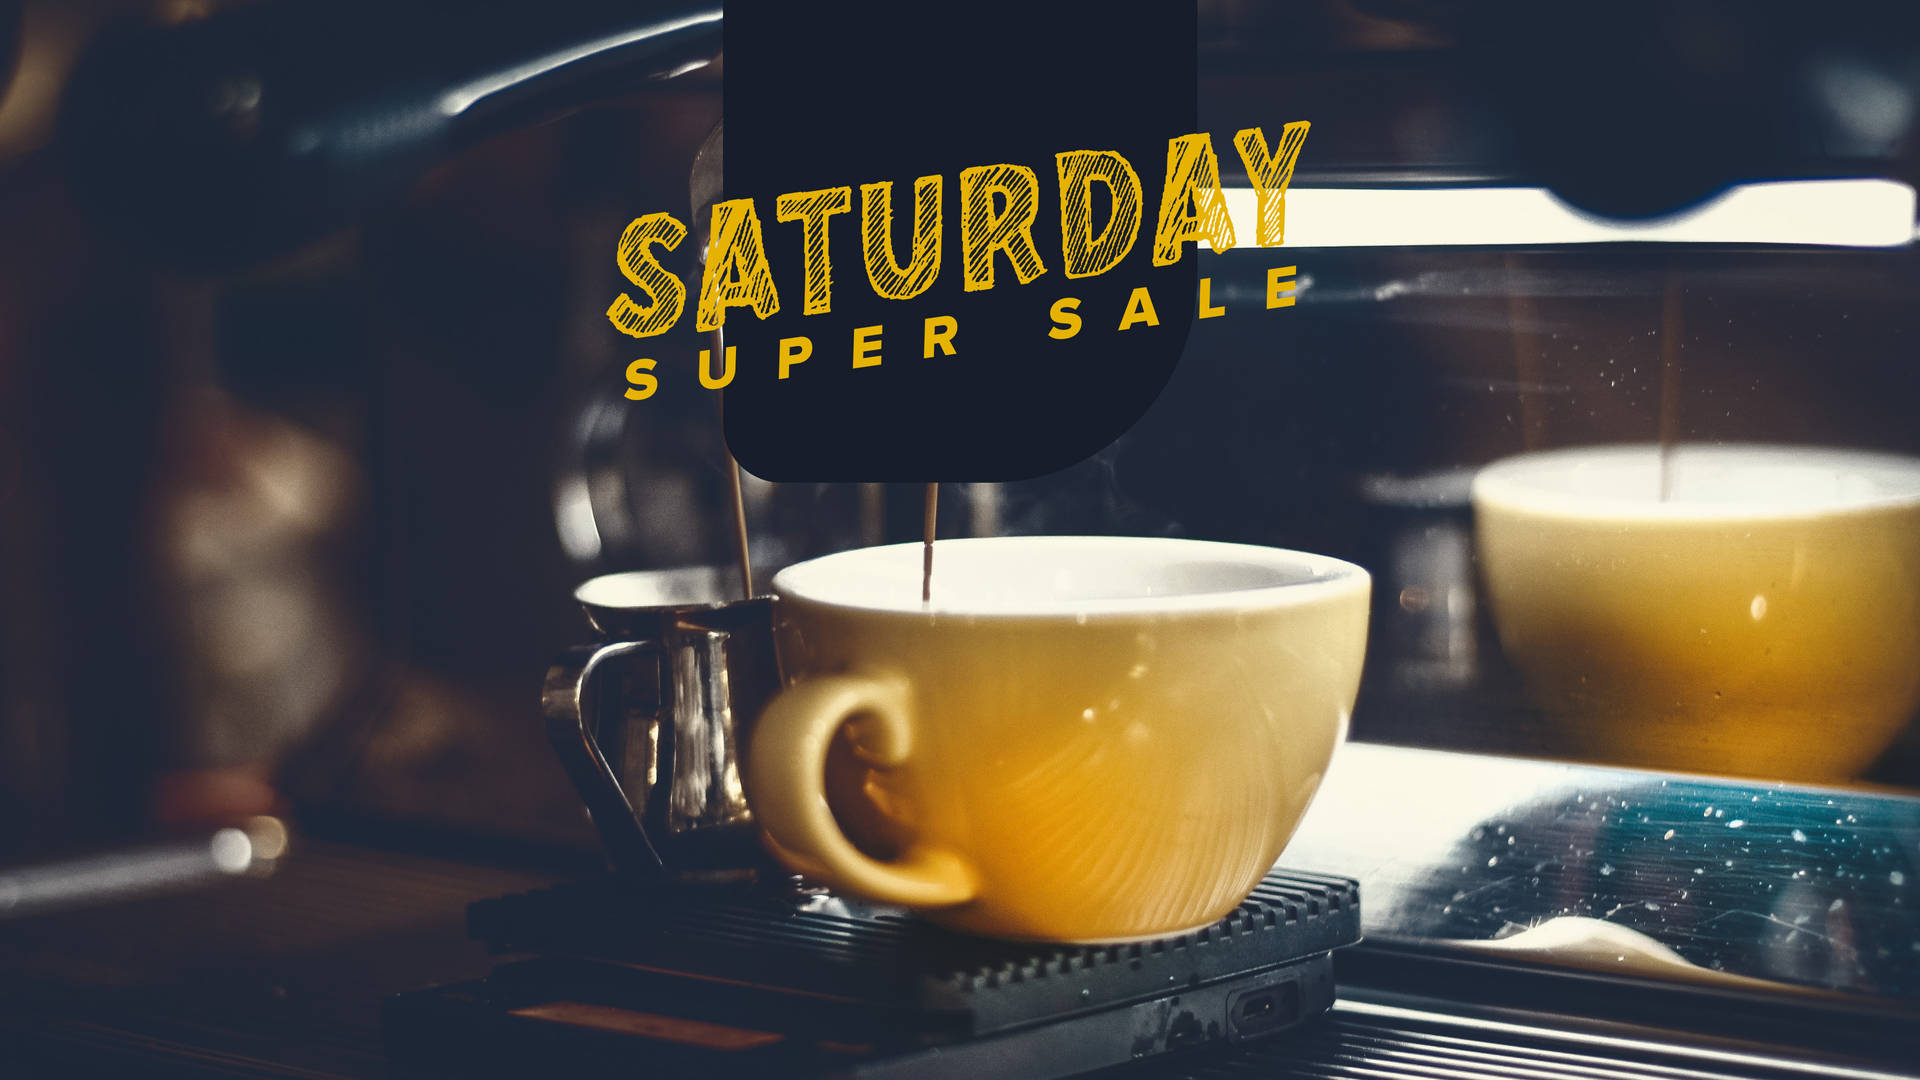 Coffee-themed Super Saturday Sale